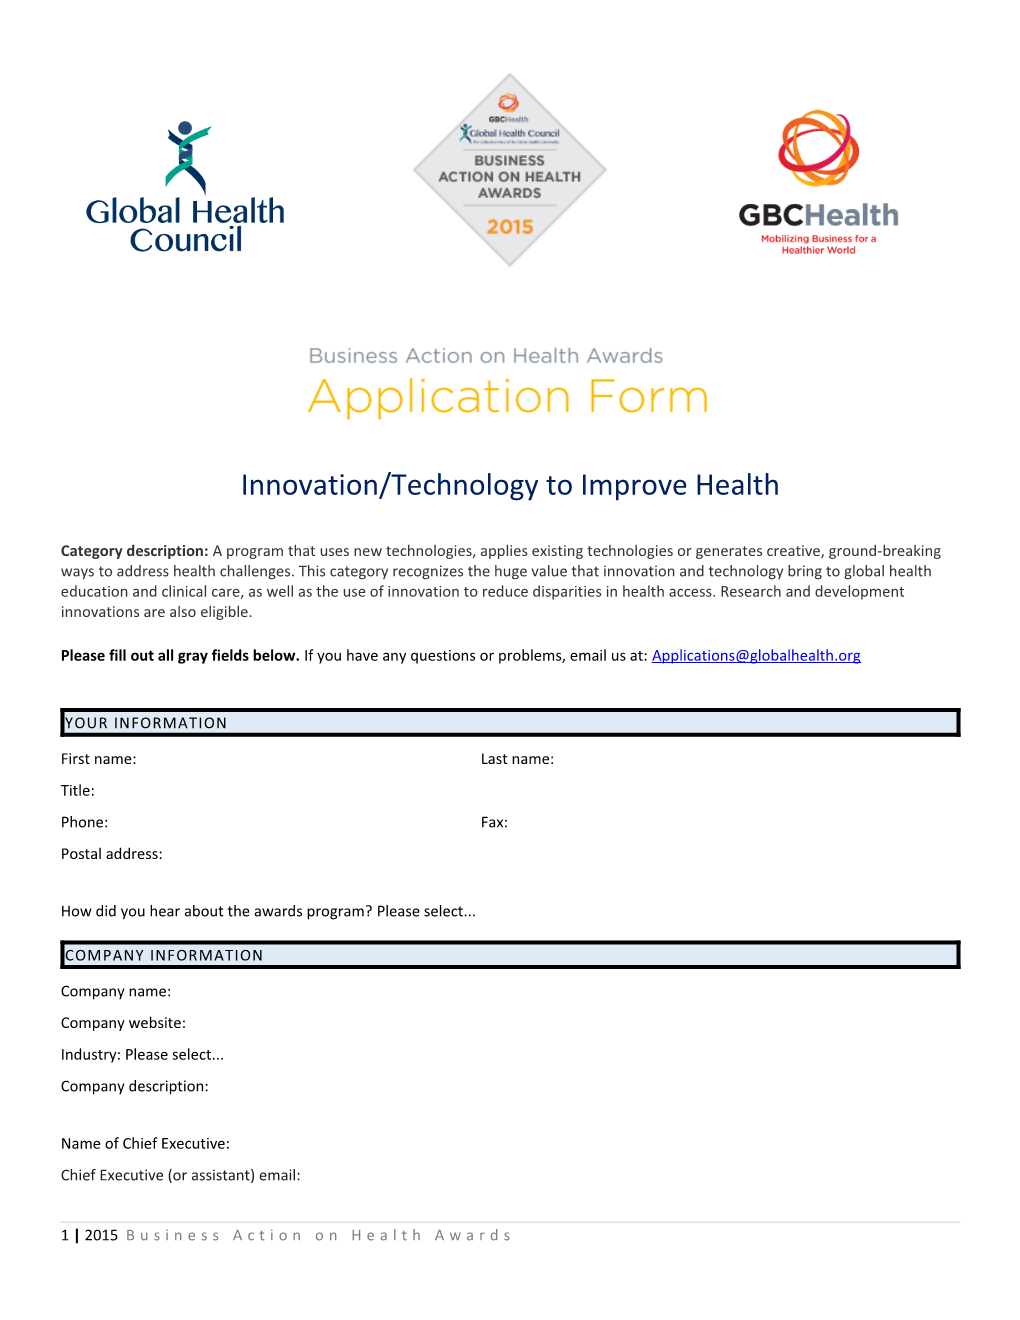 Innovation/Technology to Improve Health